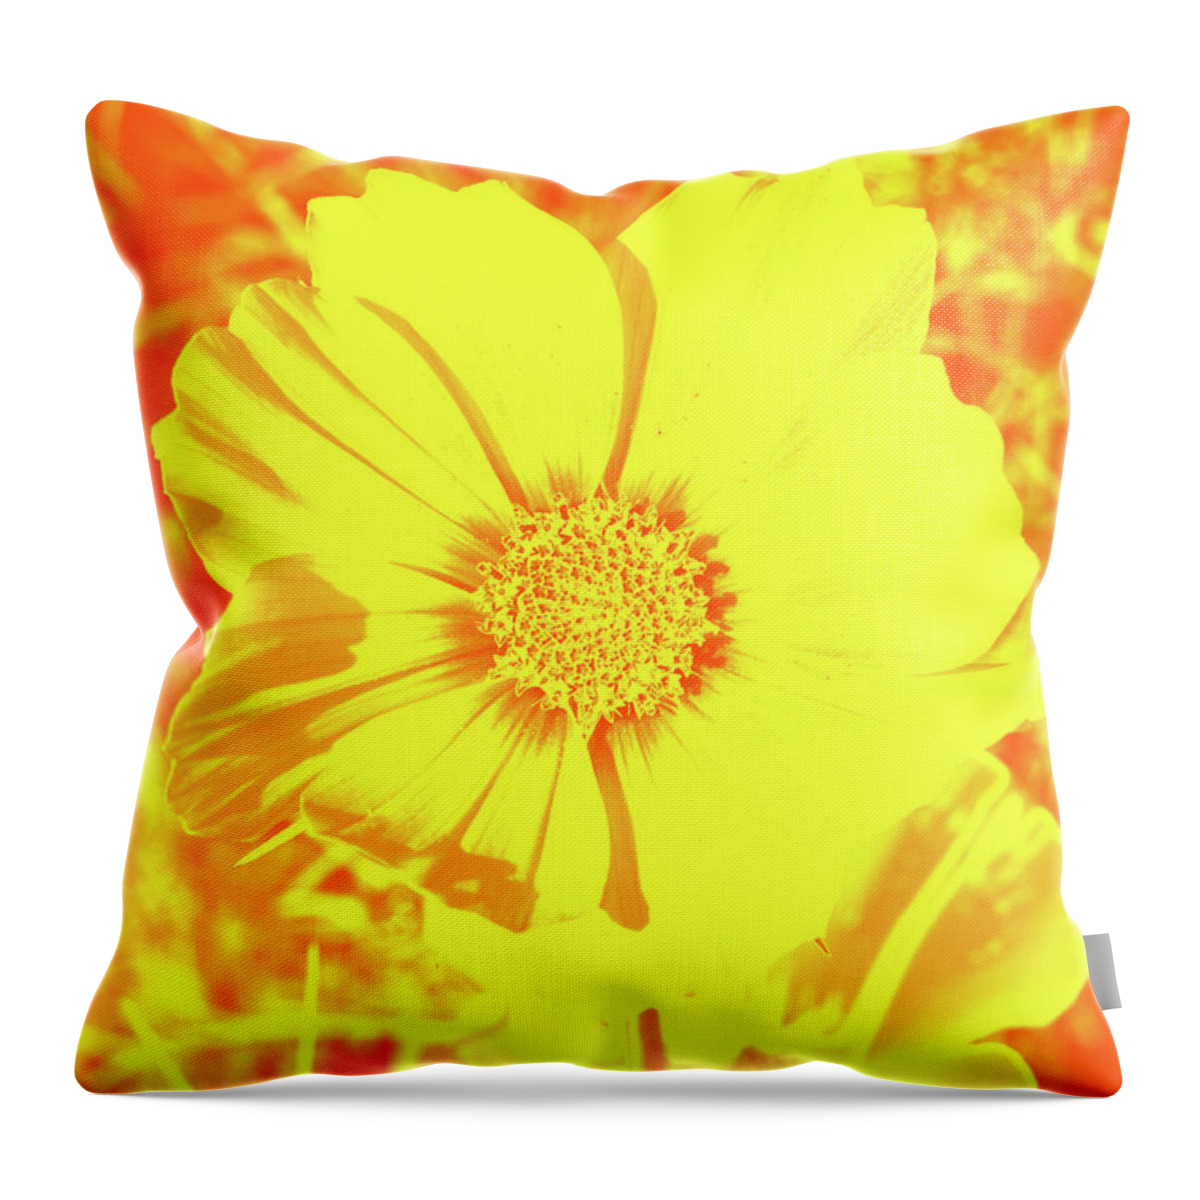 Art Throw Pillow featuring the digital art Yellow Flower On Orange by David Desautel